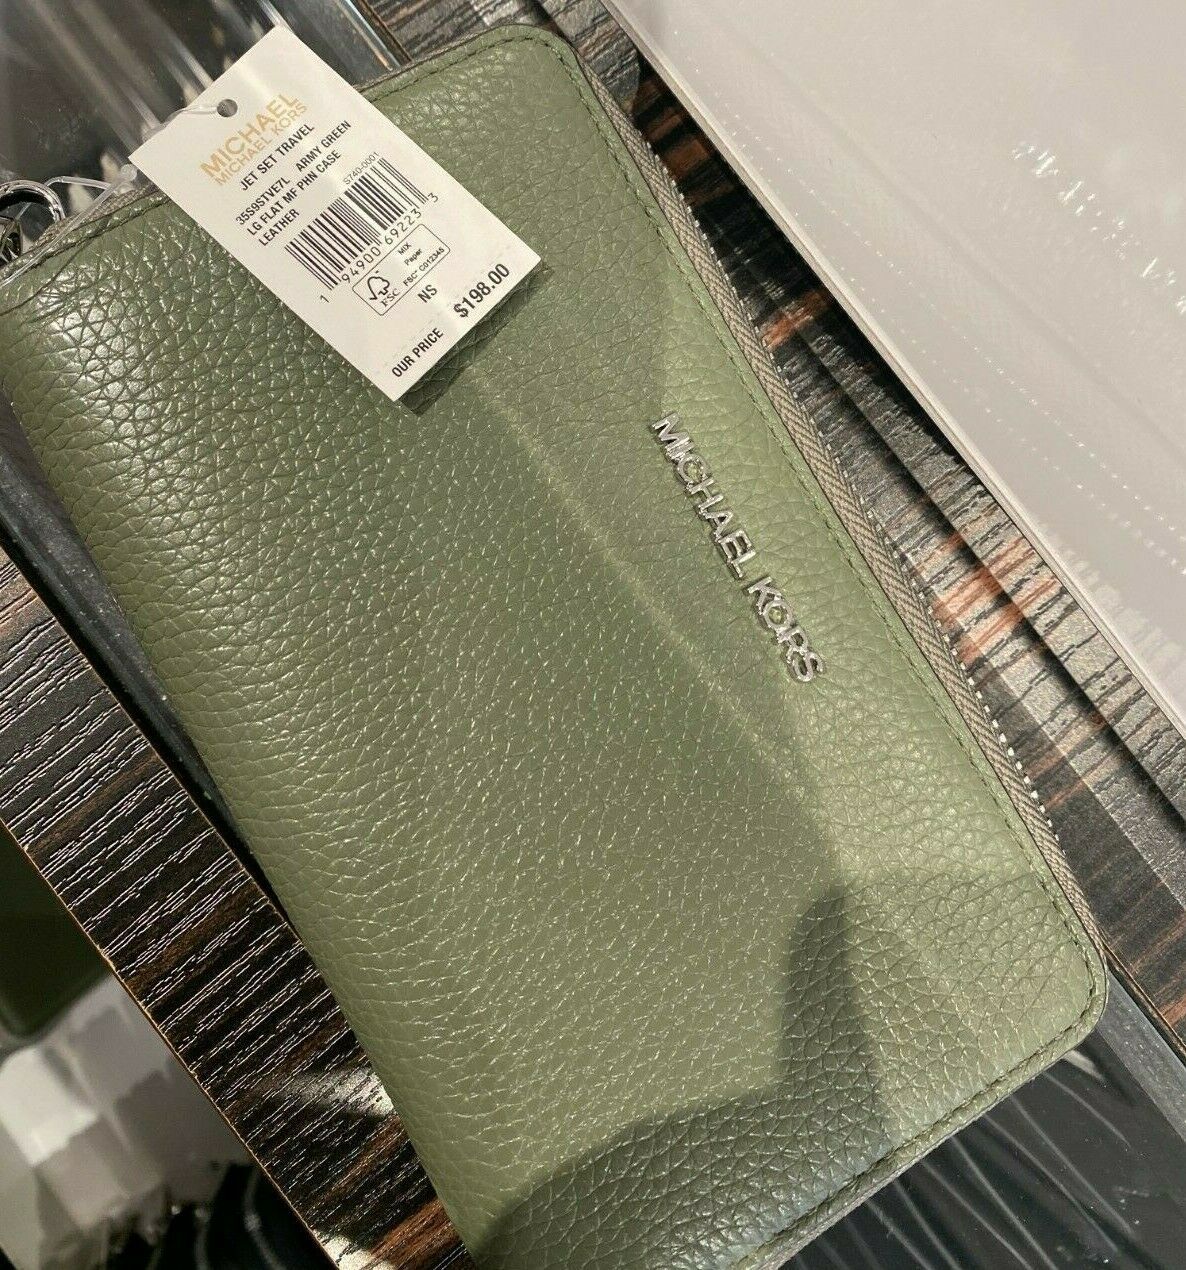 NWB Michael Kors Jet Set Phone Case Wallet Wristlet Green Leather Dust Bag FS